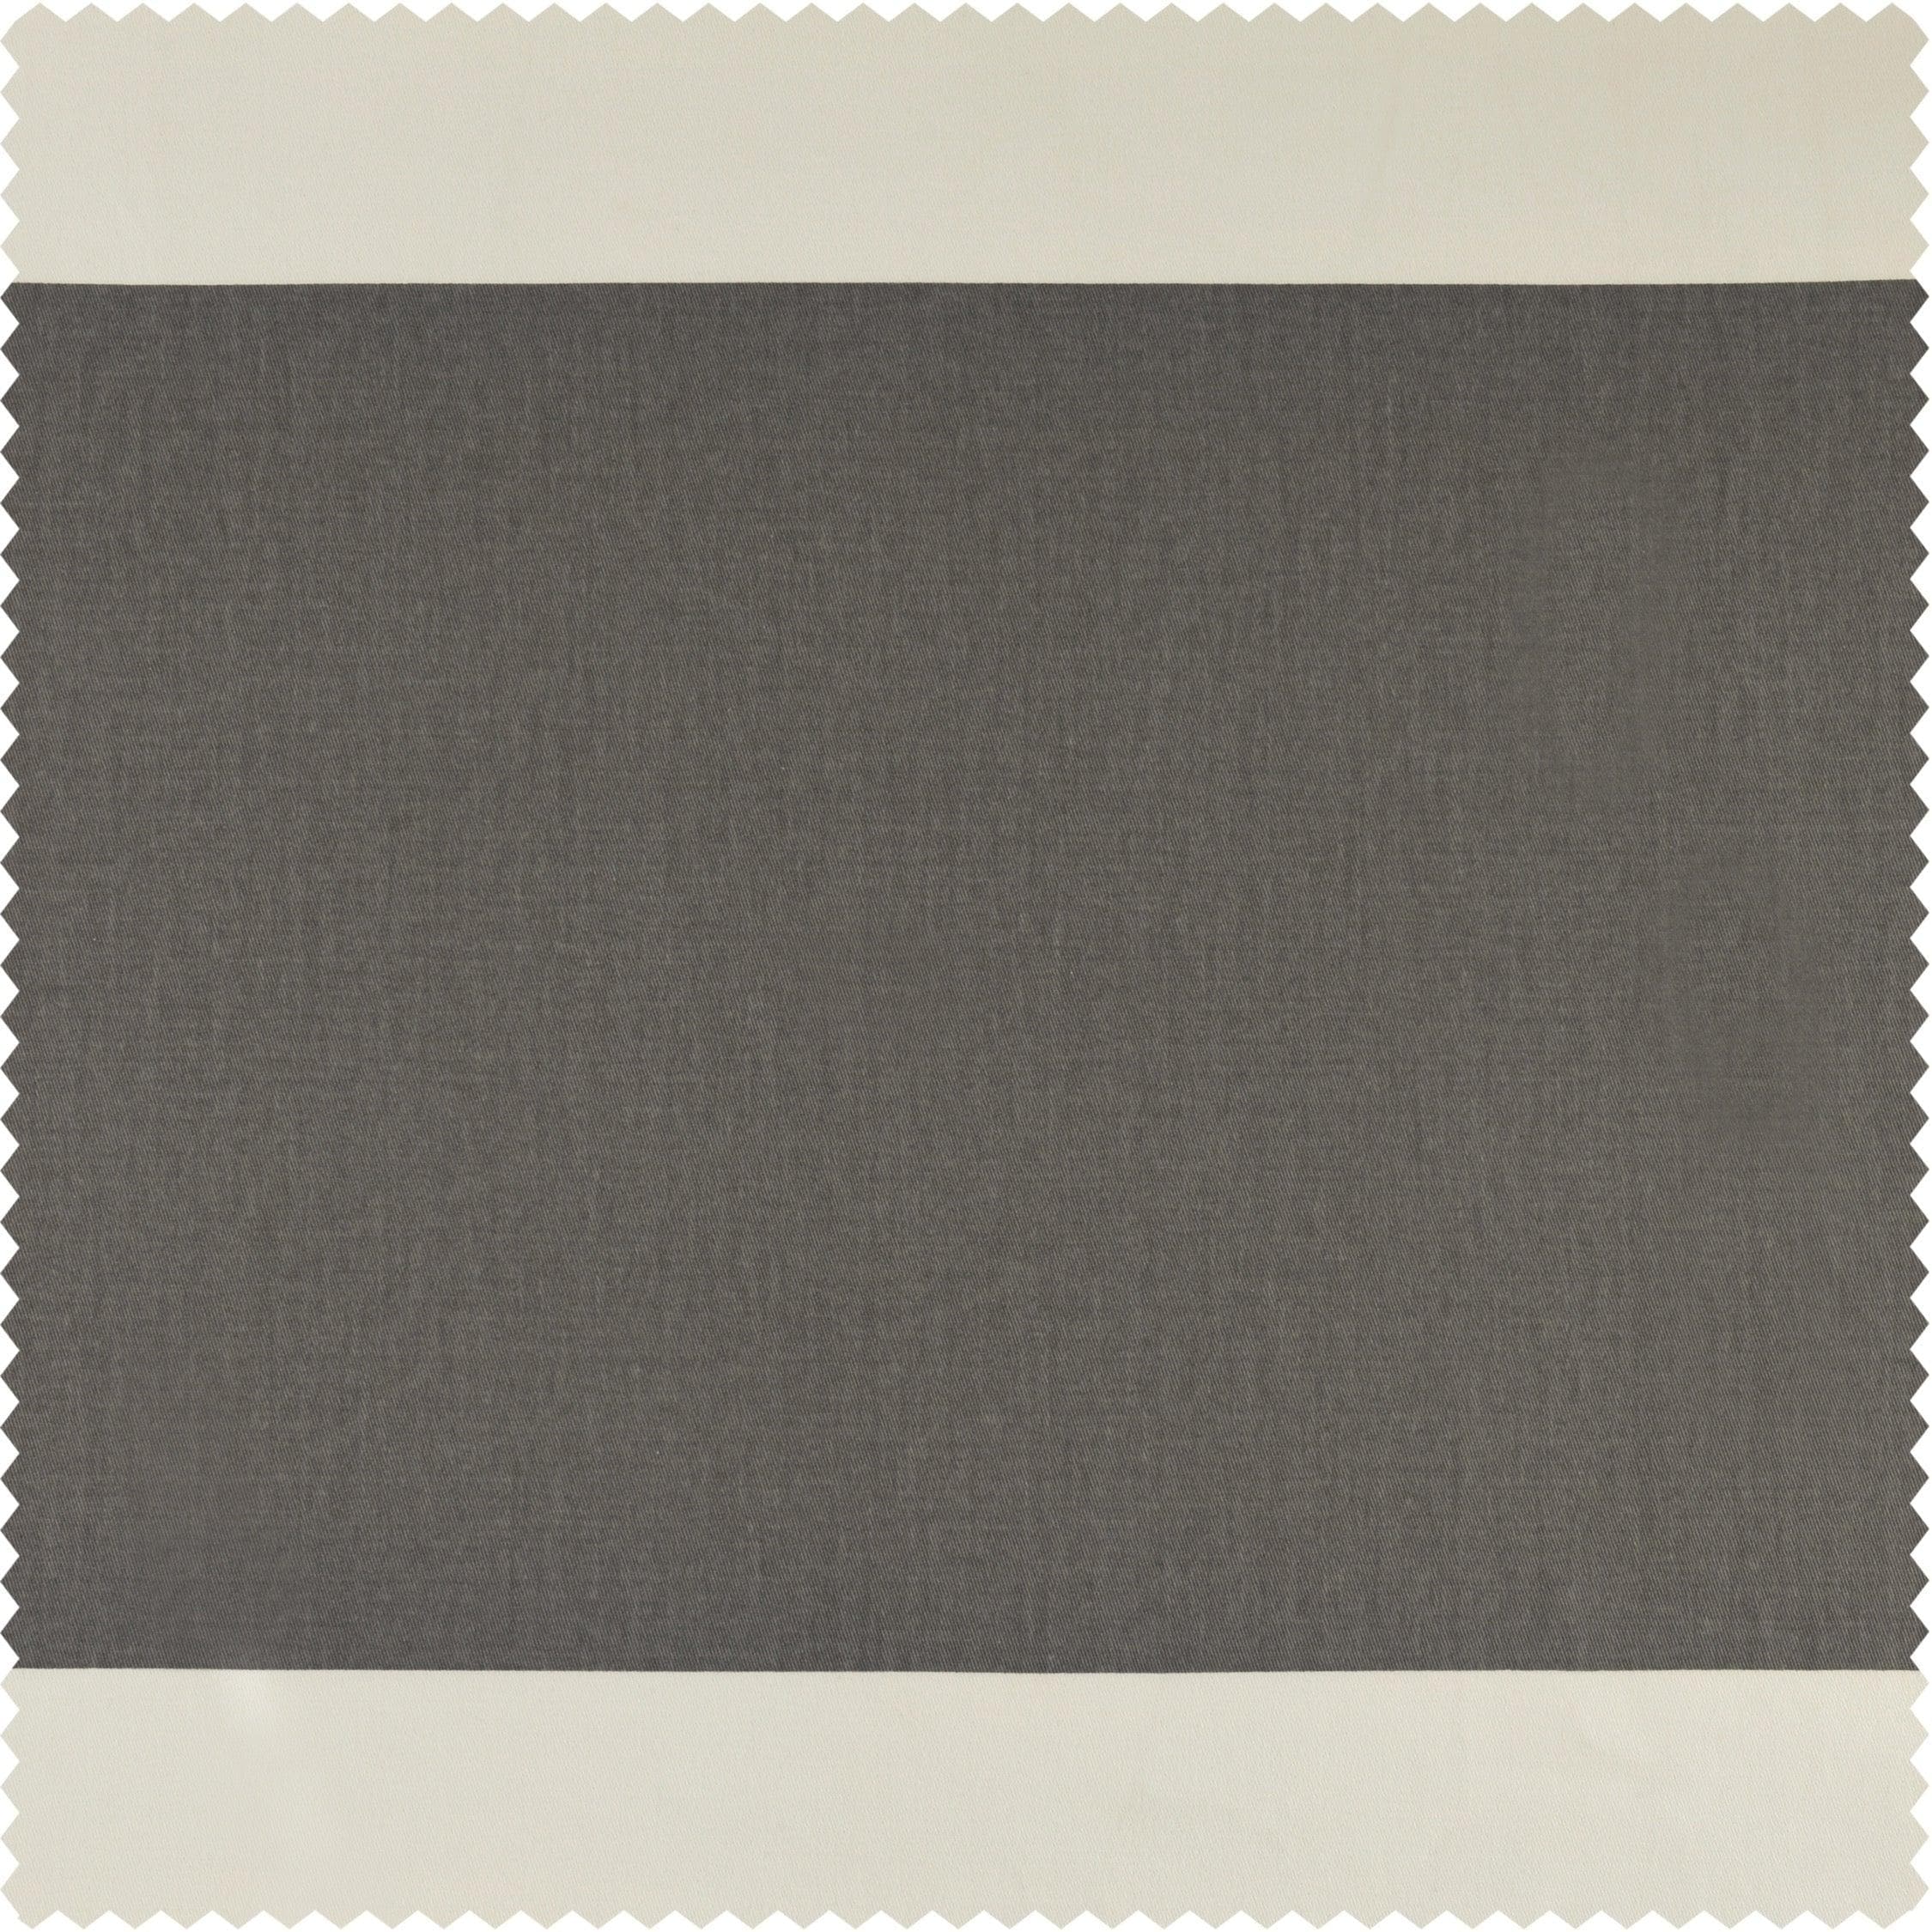 Slate Grey & Off White Horizontal Striped Printed Cotton Swatch